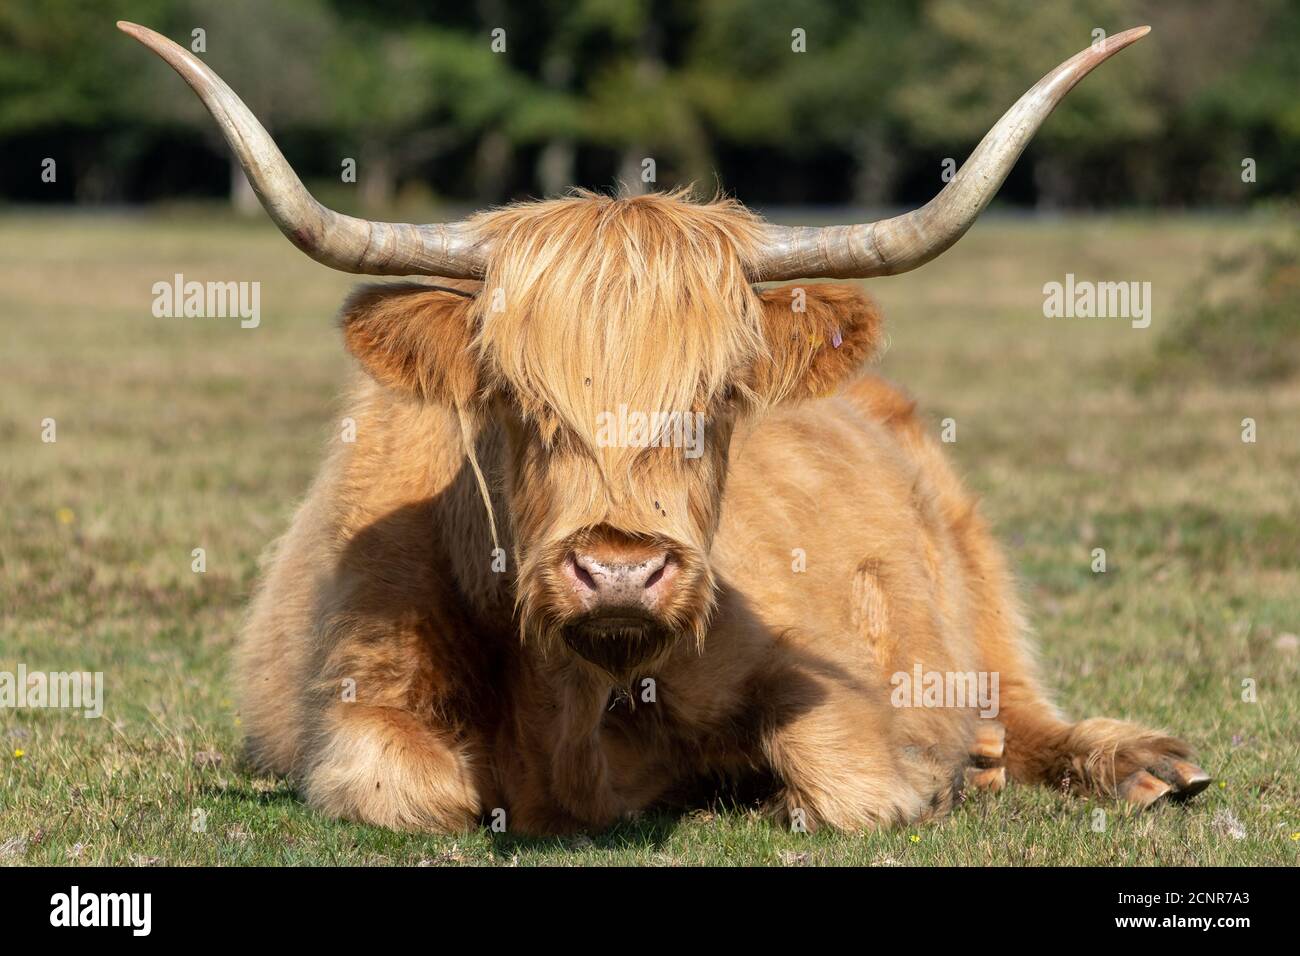 Long-horned highland cow, New Forest, Hampshire, UK Stock Photo